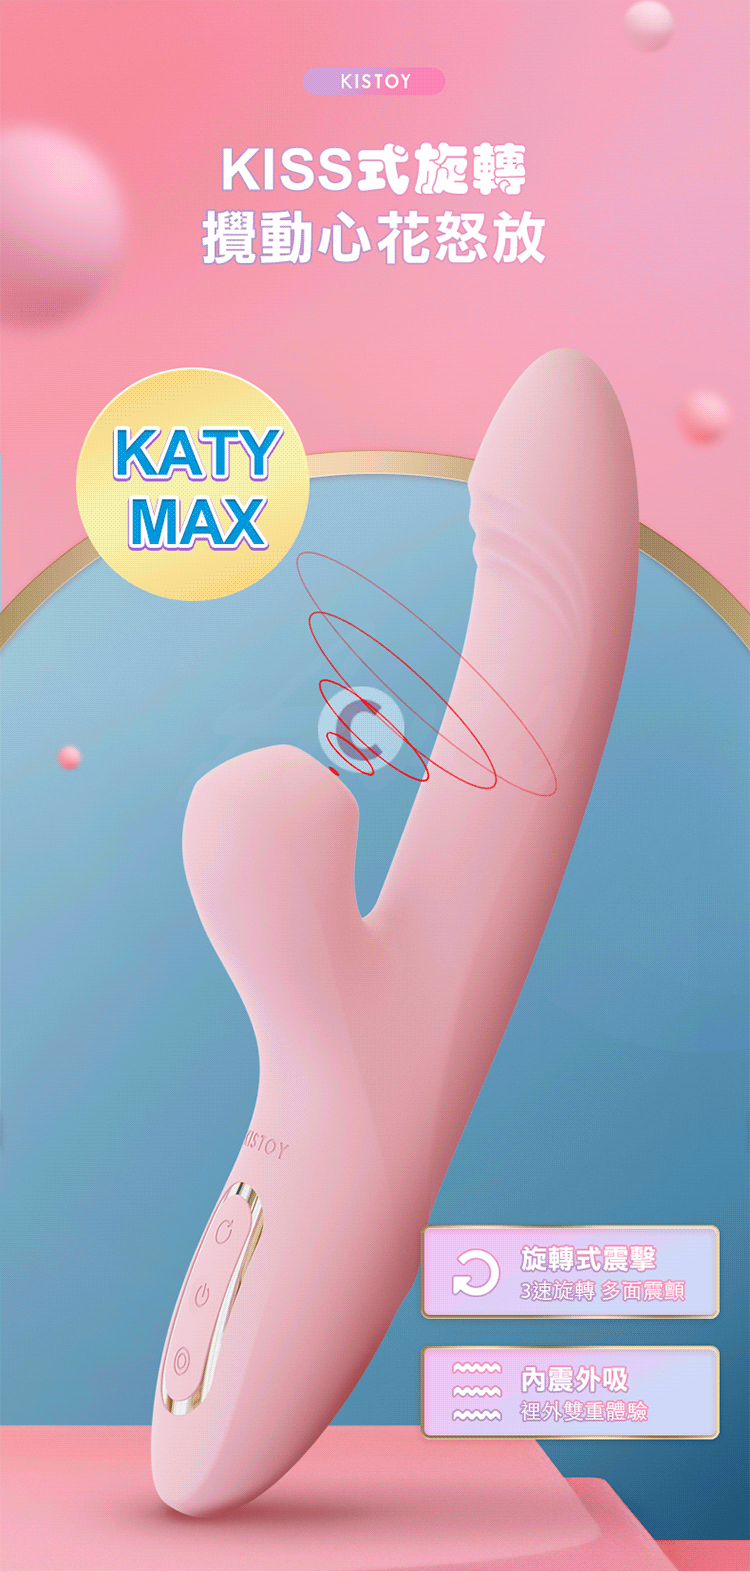 KISSTOY - Katy Max 吸啜款旋轉式雙頭按摩棒